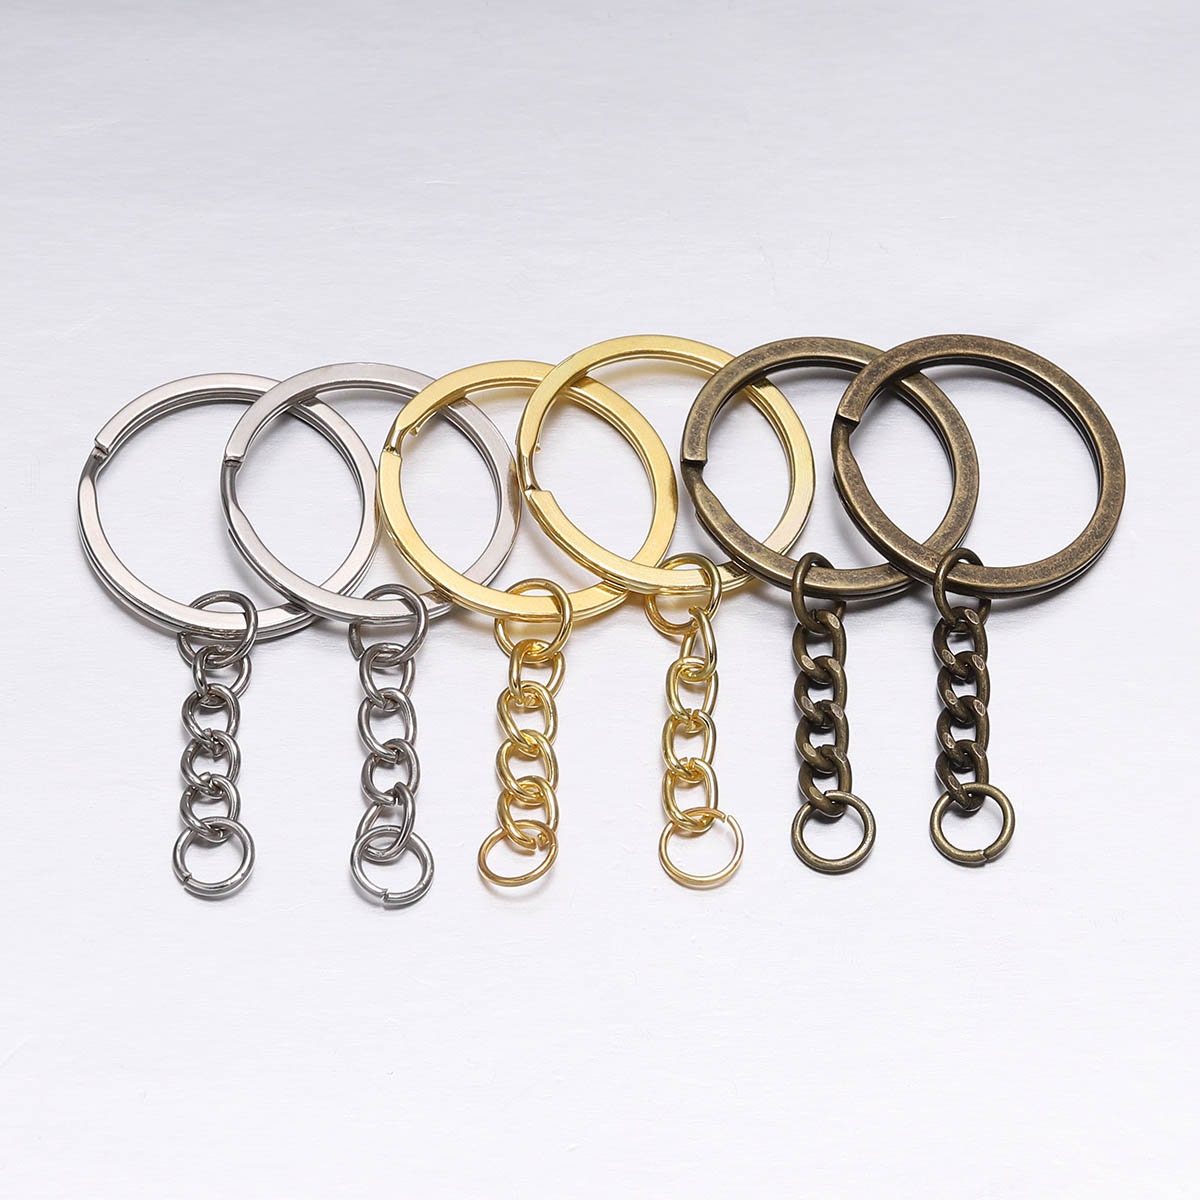 10pcs Key Ring Ring Size: 30mm Key Chain Rhodium